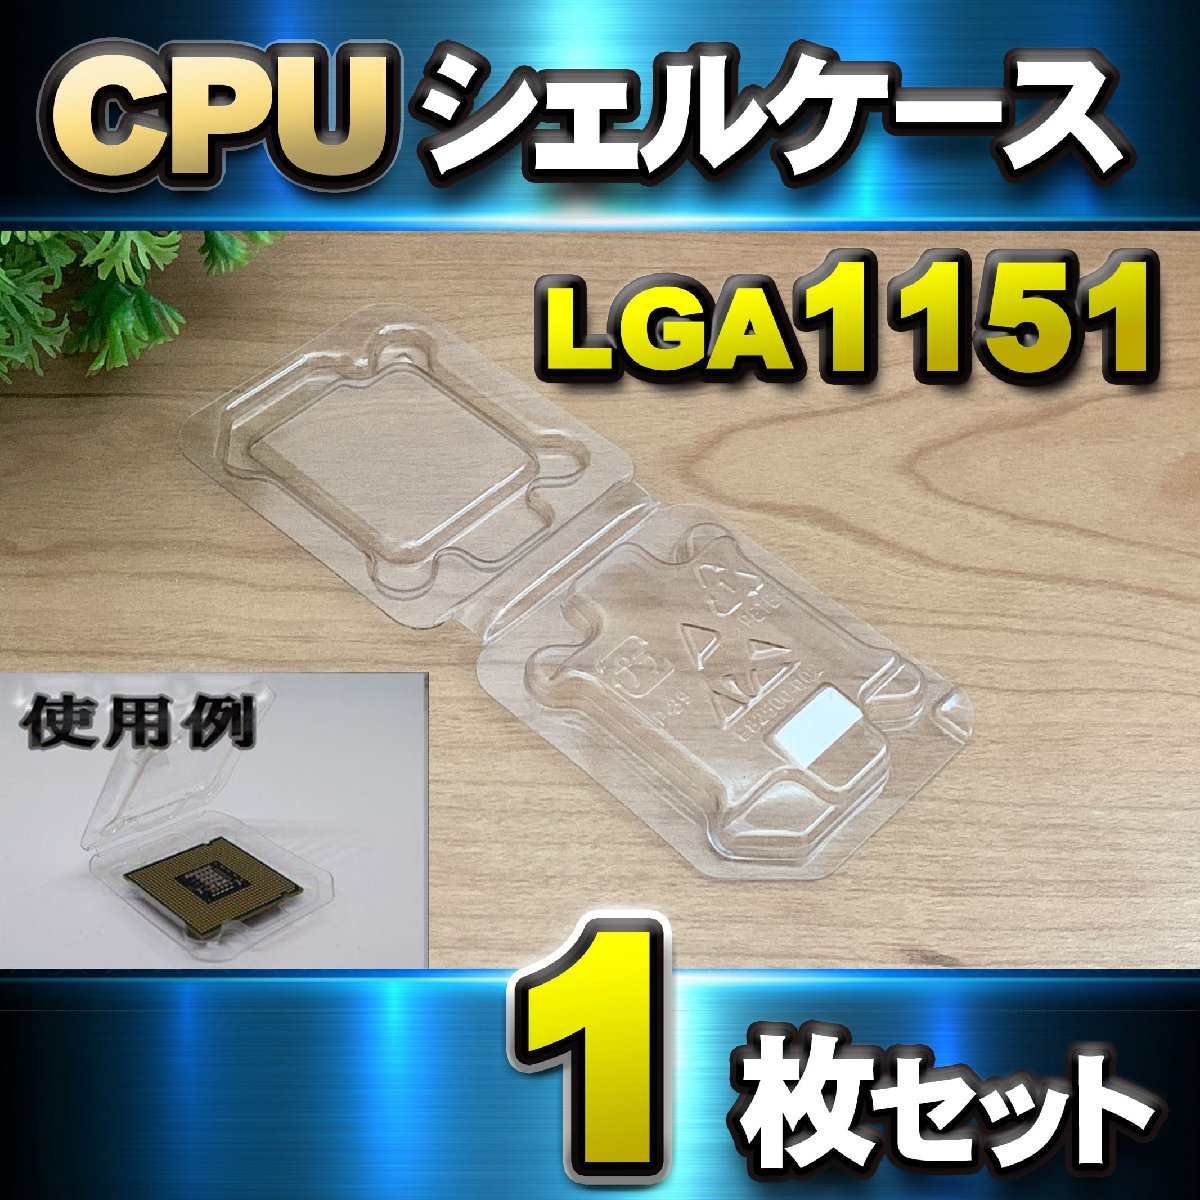 【 LGA1151 】CPU シェルケース LGA 用 プラスチック 保管 収納ケース 1枚セット_画像1